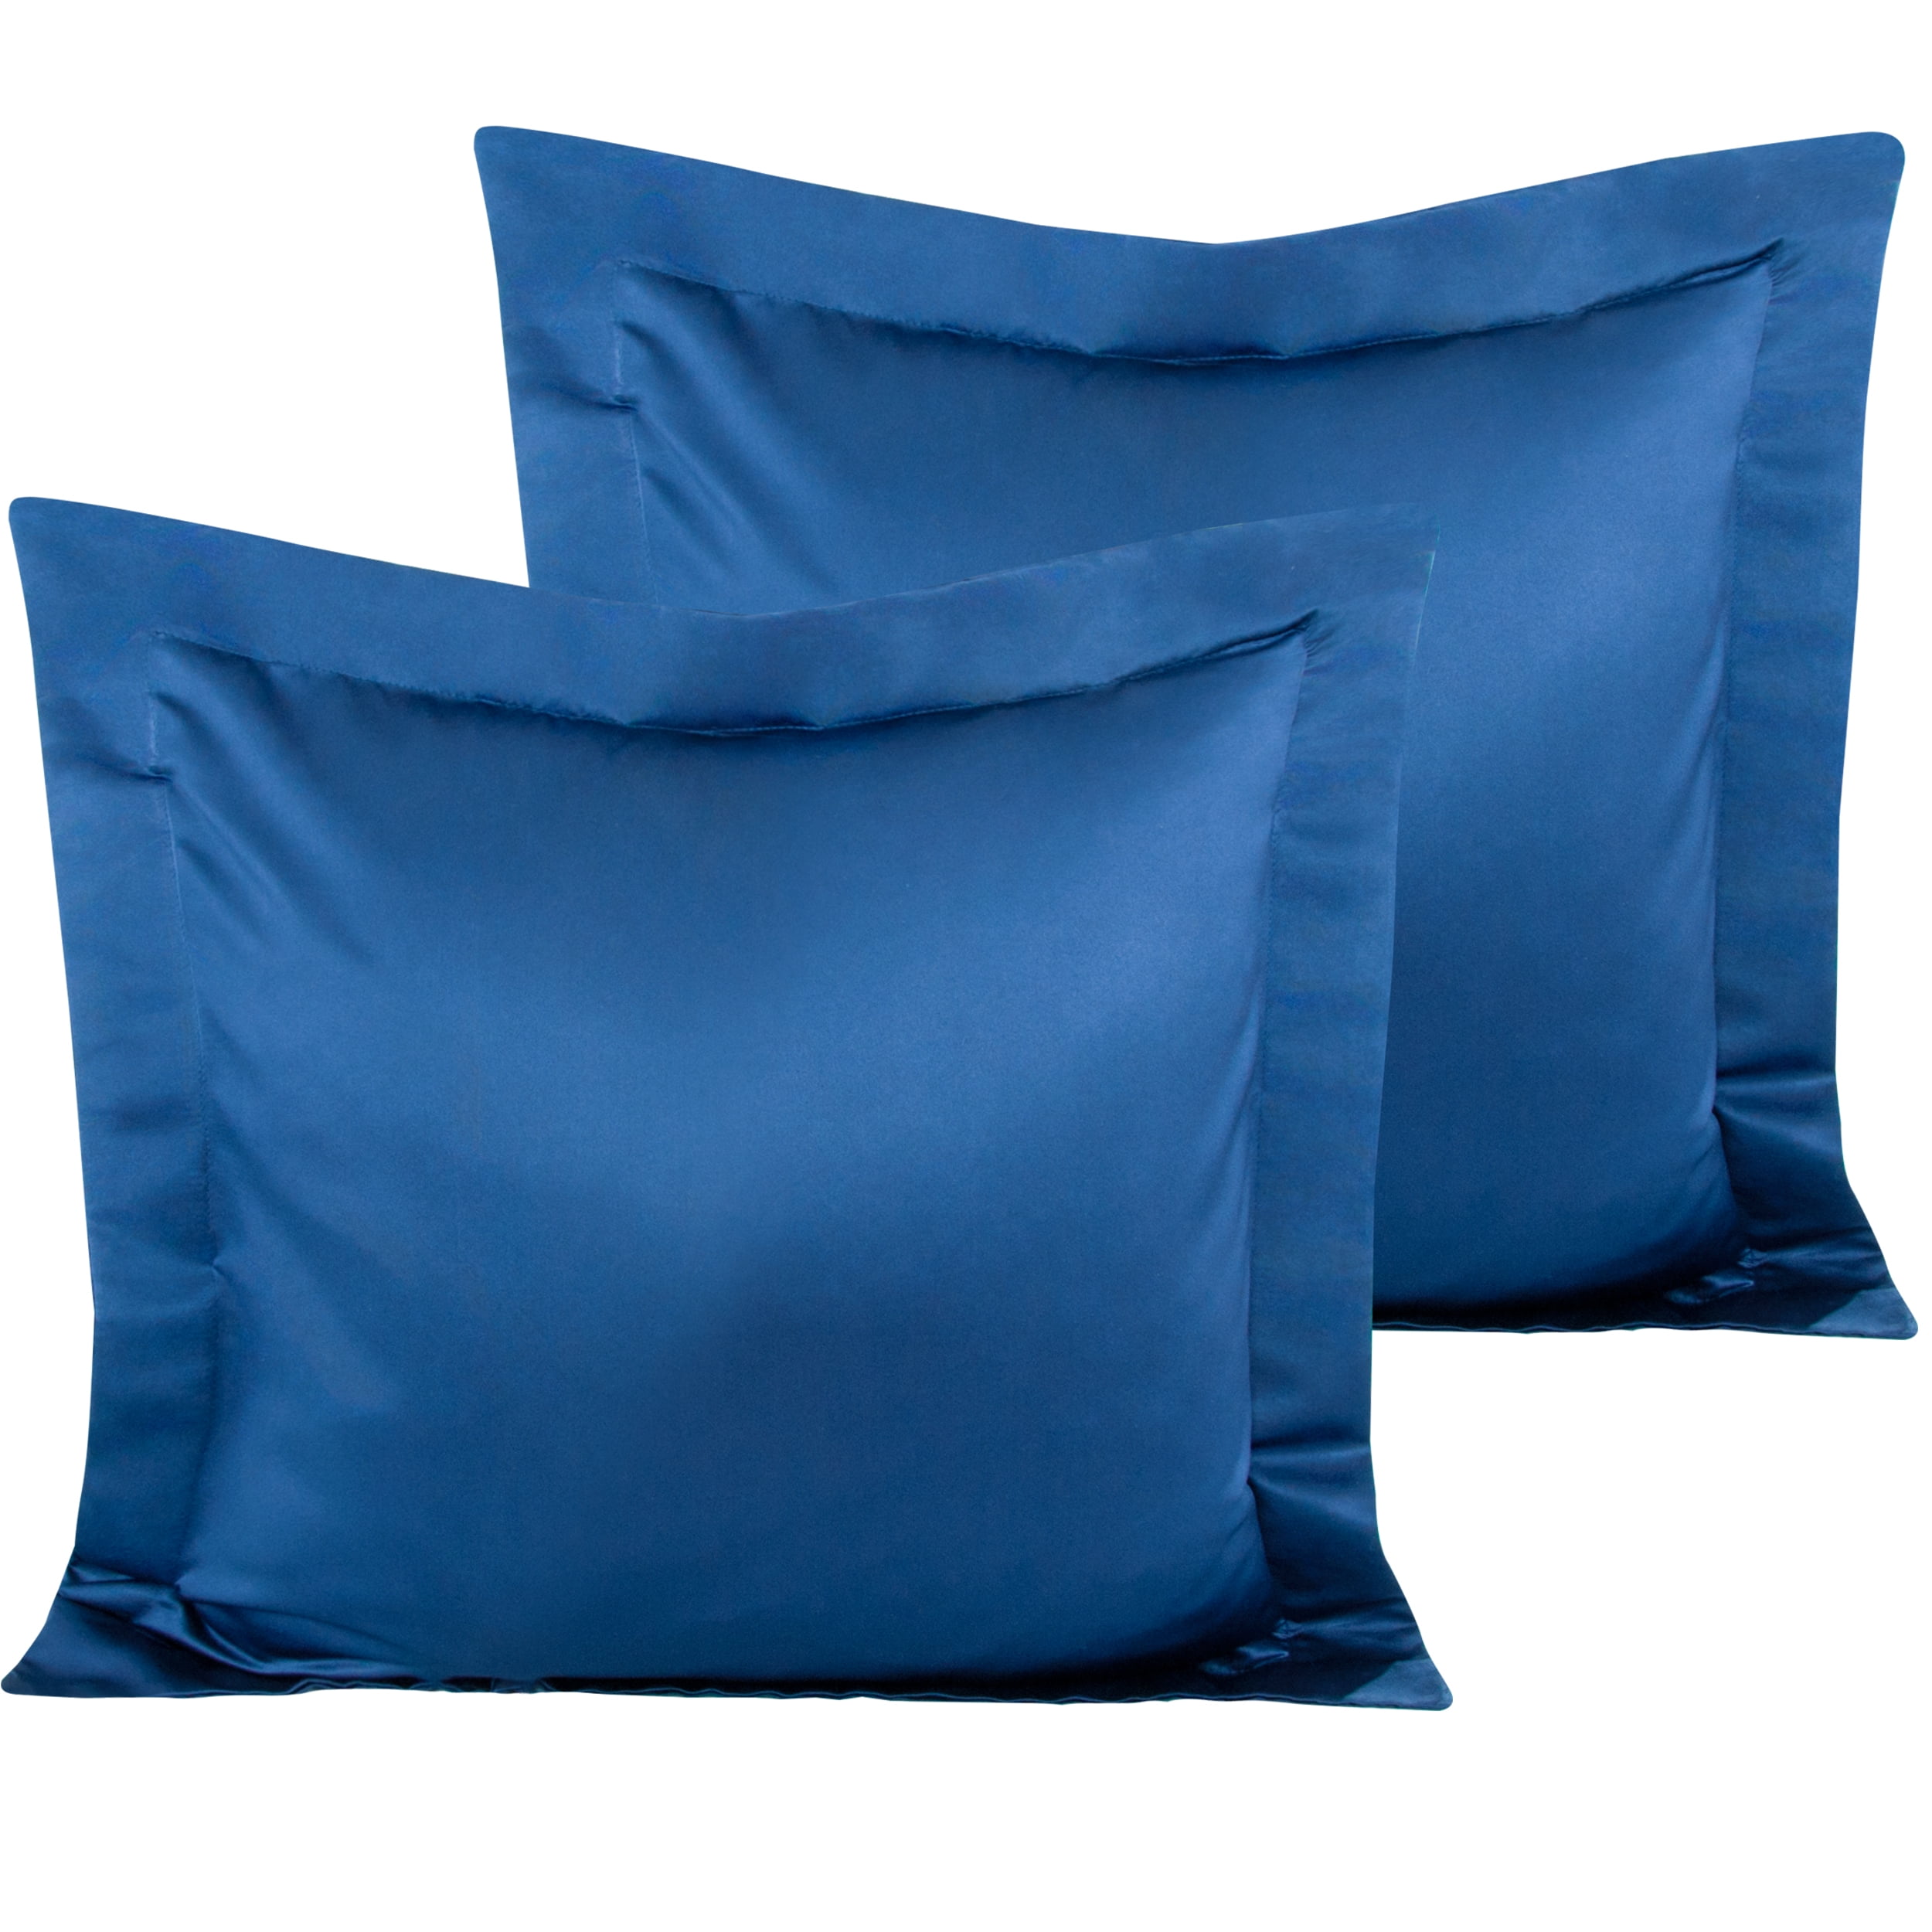 Ntbay 2 Pack Silk Satin Euro Pillow Shams Super Soft And Cozy European Throw Pillow Covers 26